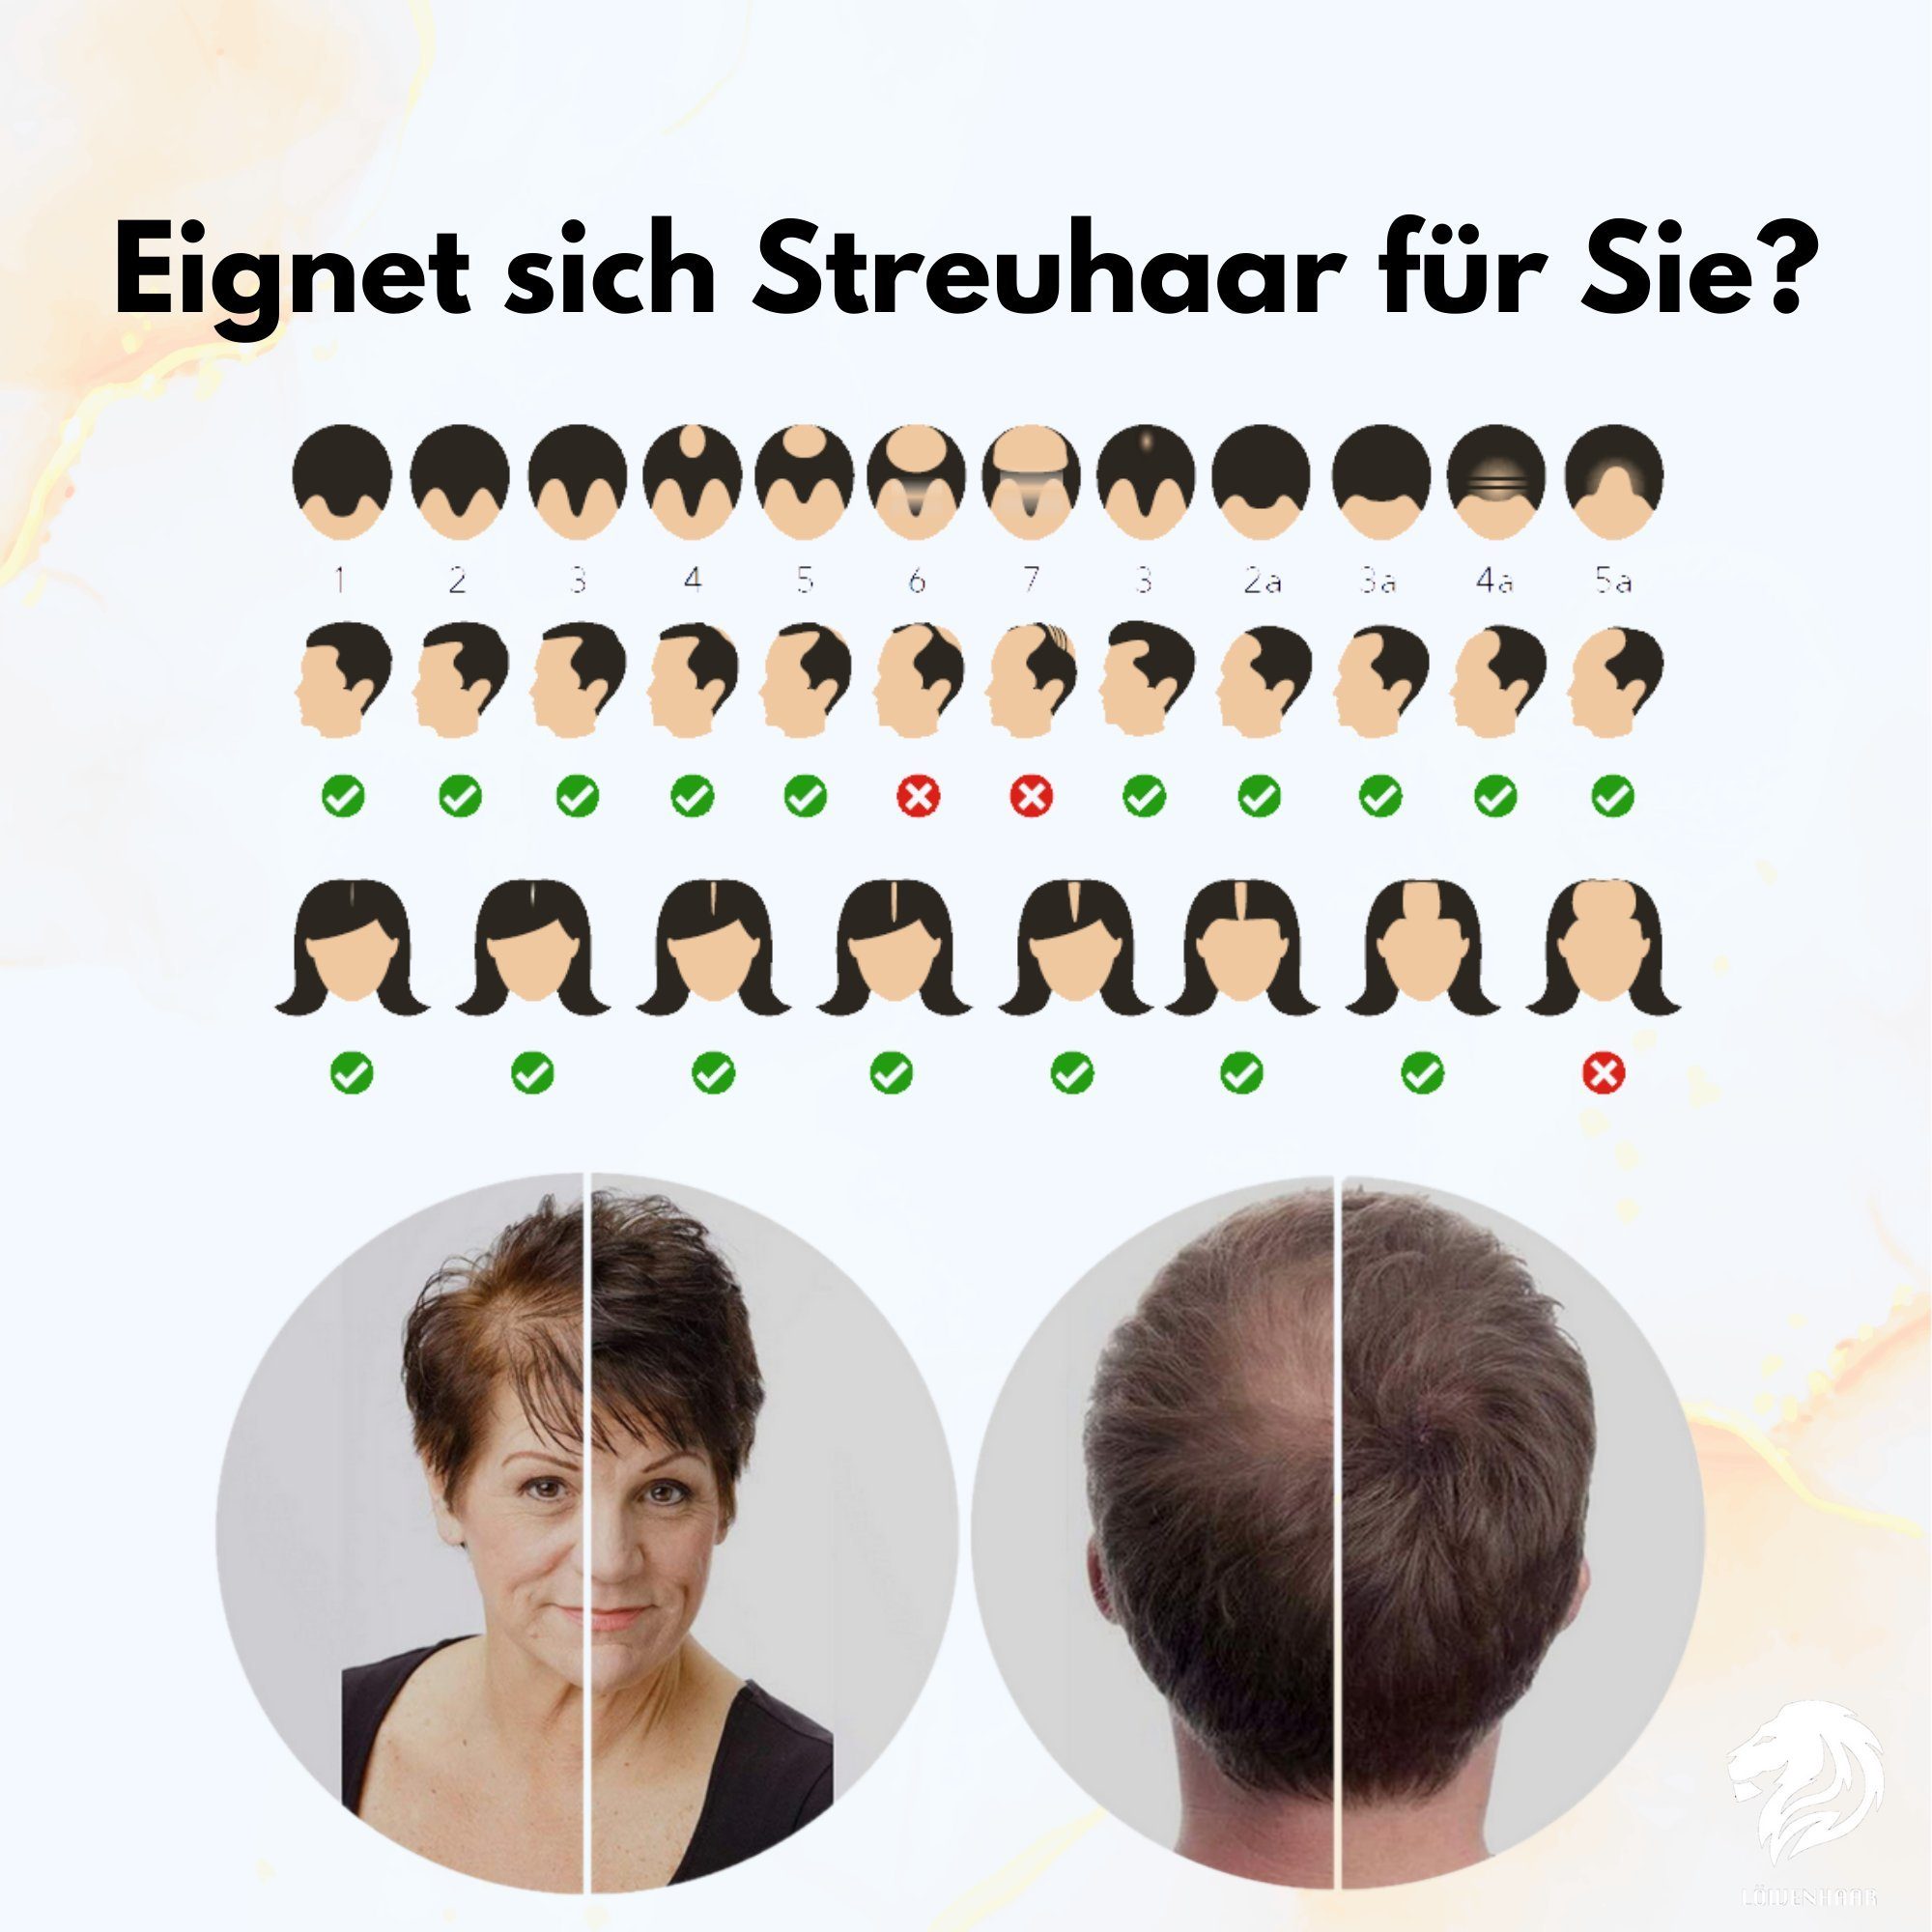 x Streuhaar/Schütthaar/Hair 27.5g] [3 Fibers DarkBrown LÖWENHAAR® Löwenhaar Haarpuder